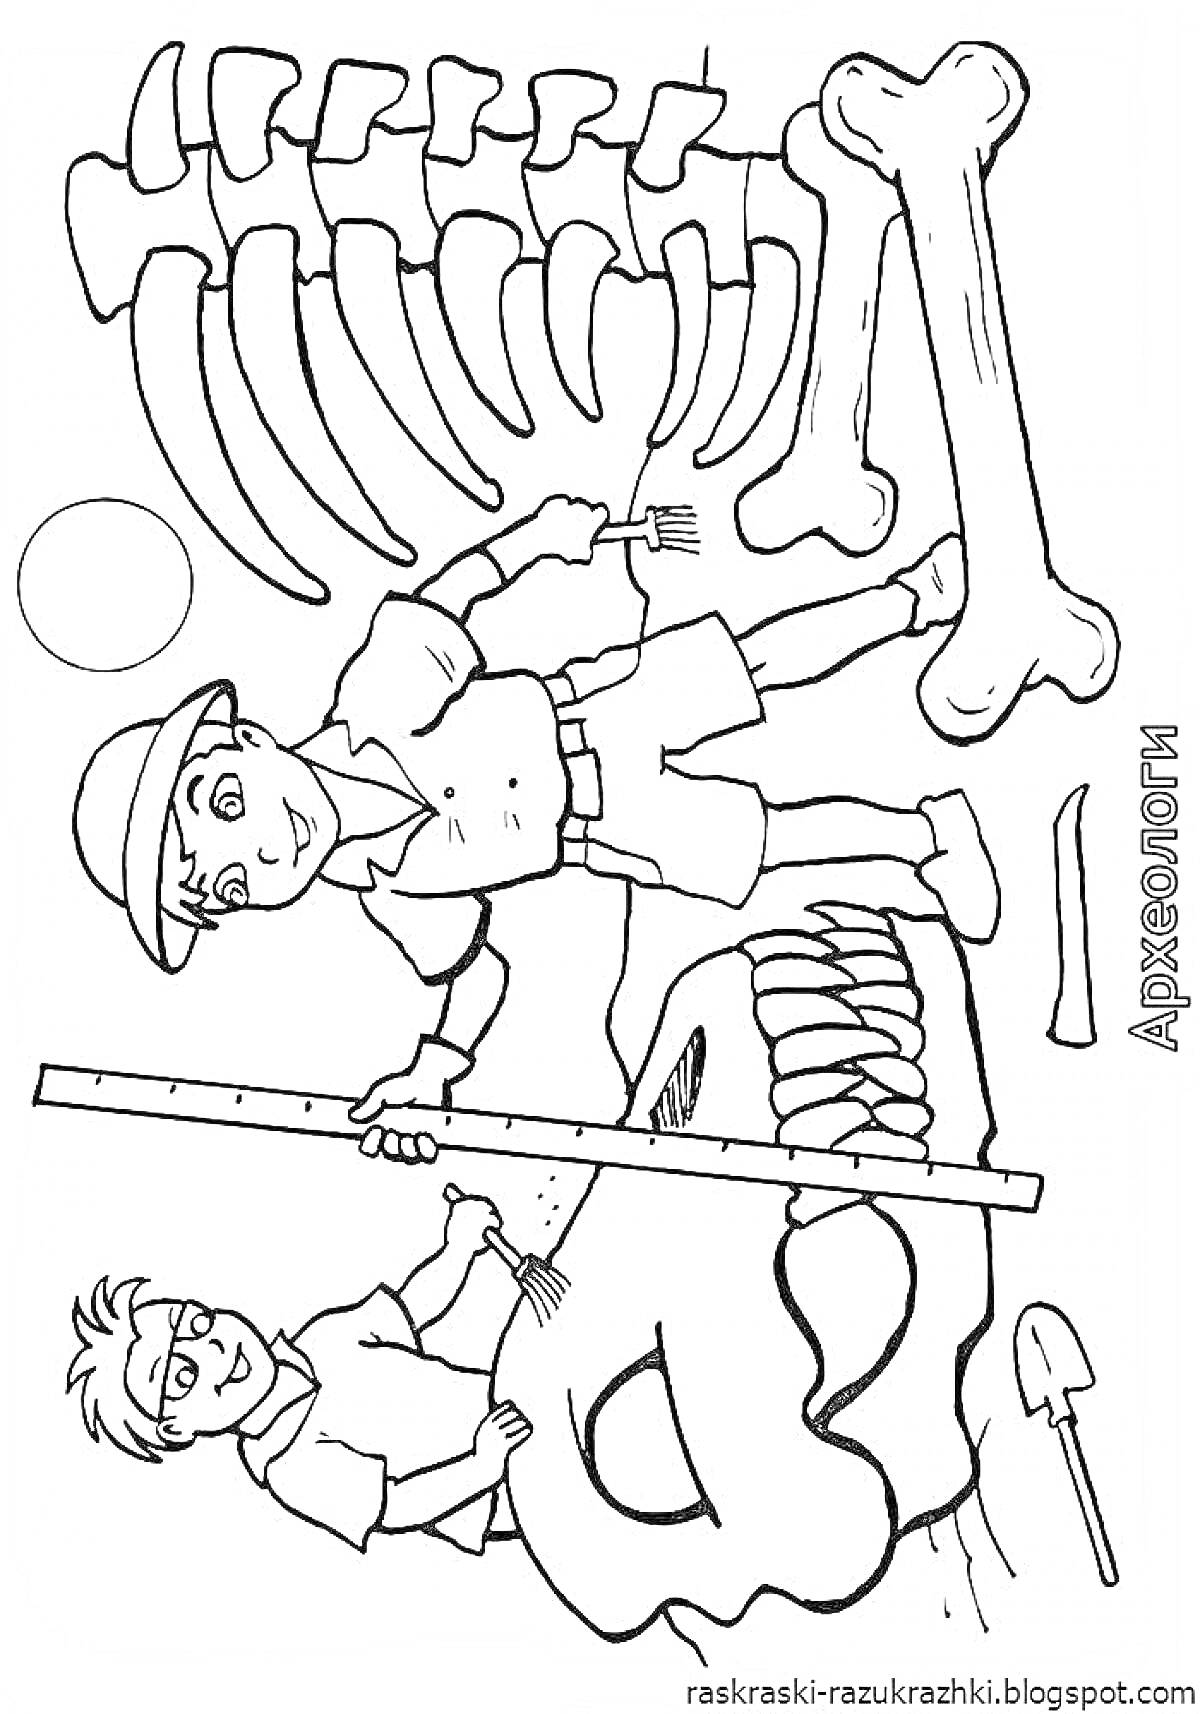 Раскраска Археологи, два мальчика-археолога, кости динозавра, лопатка, линейка, кисточки, шляпа.